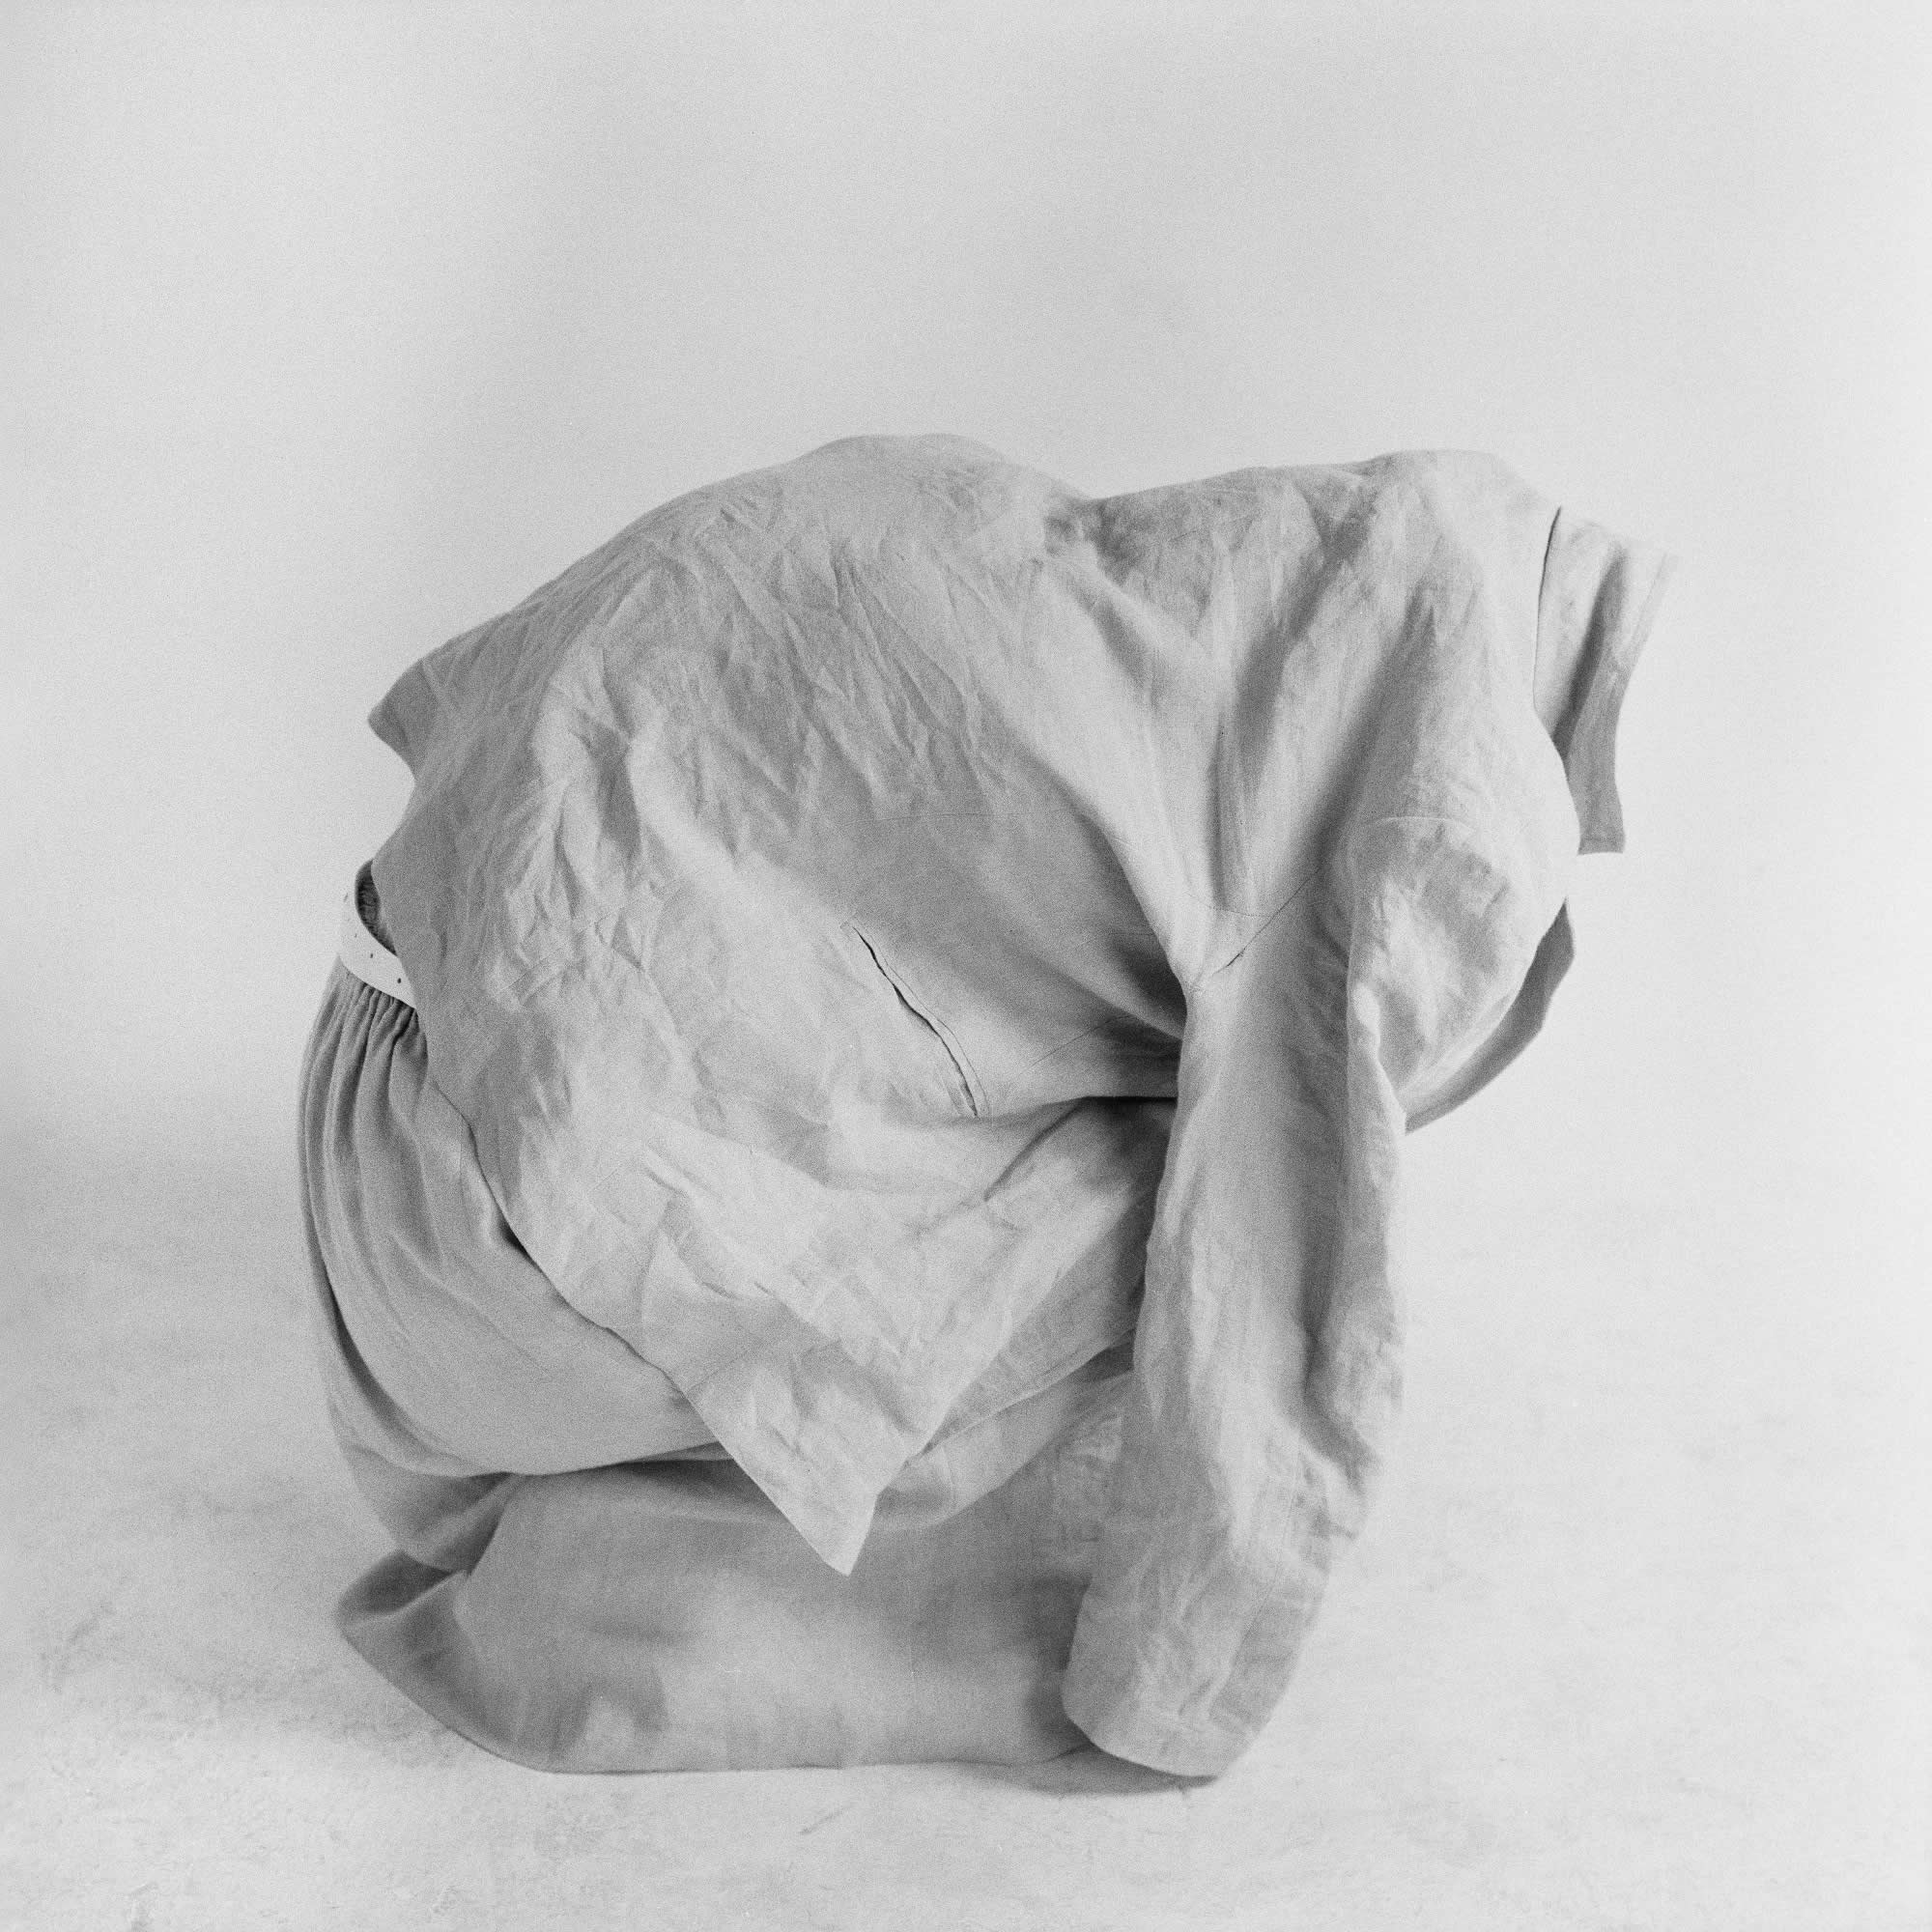 Margot Pilz | Sekundenskulpturen | 1978 | vienna contemporary 2019 | Bildrecht Galerie3